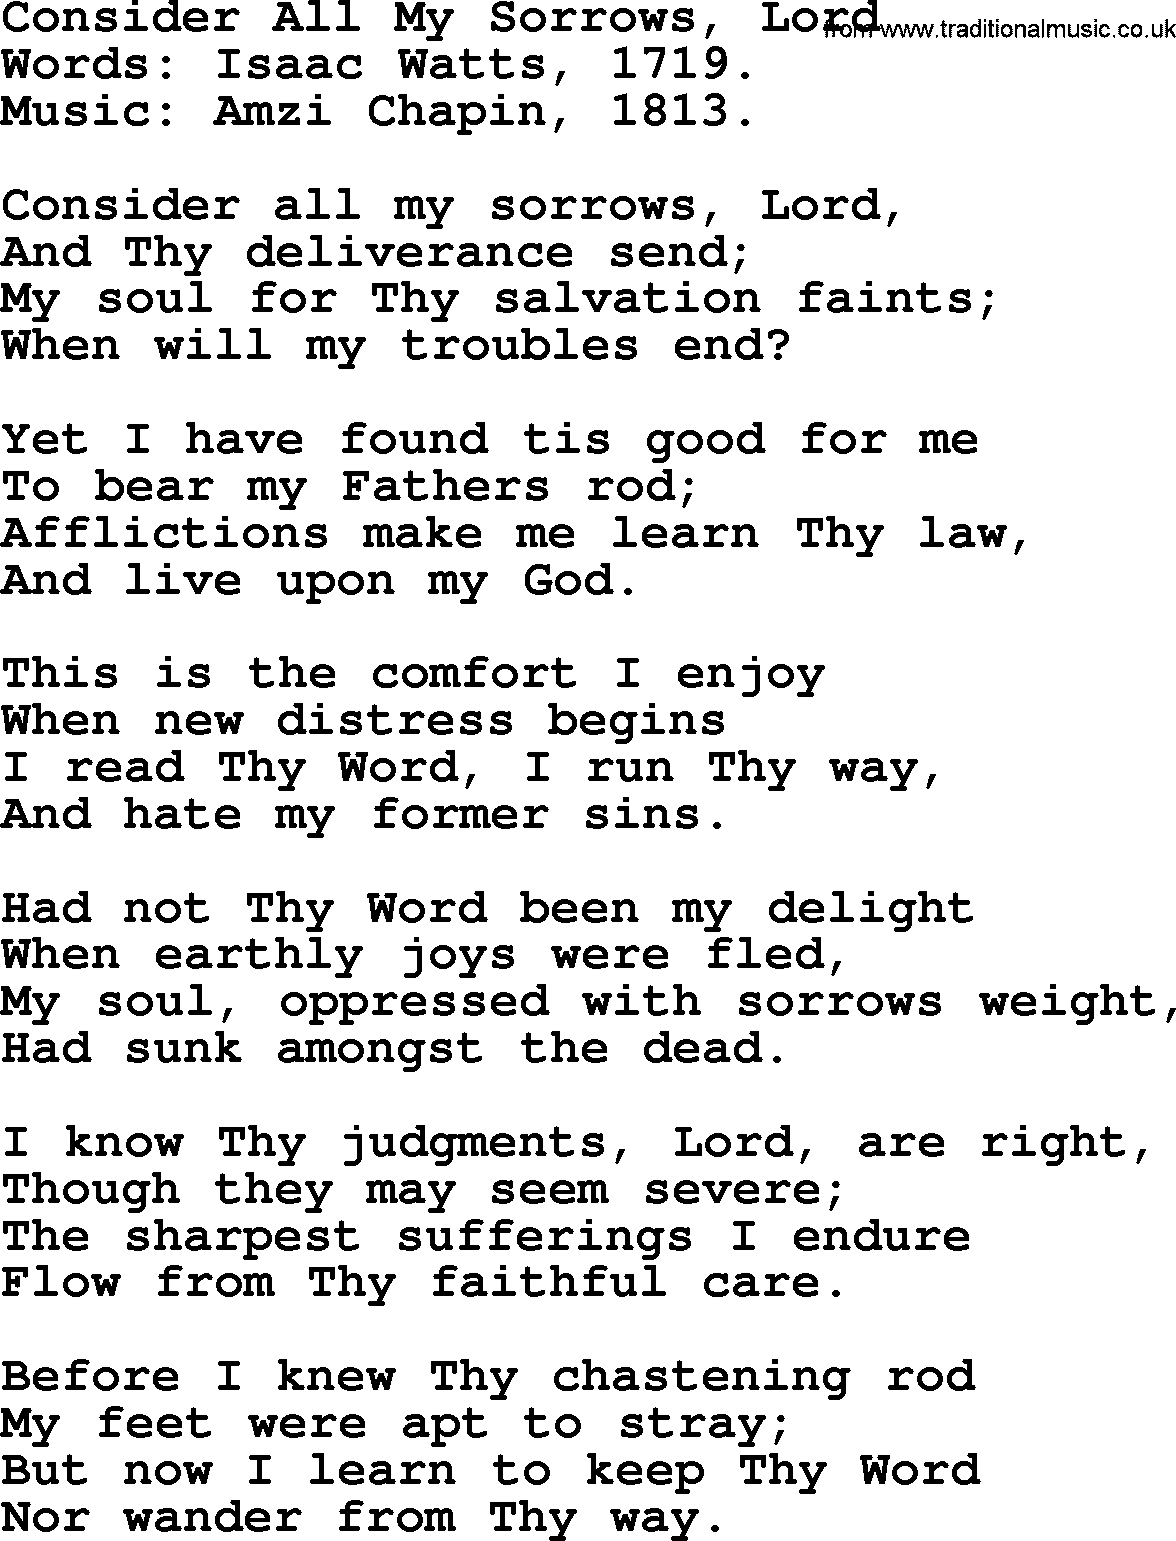 Isaac Watts Christian hymn: Consider All My Sorrows, Lord- lyricss